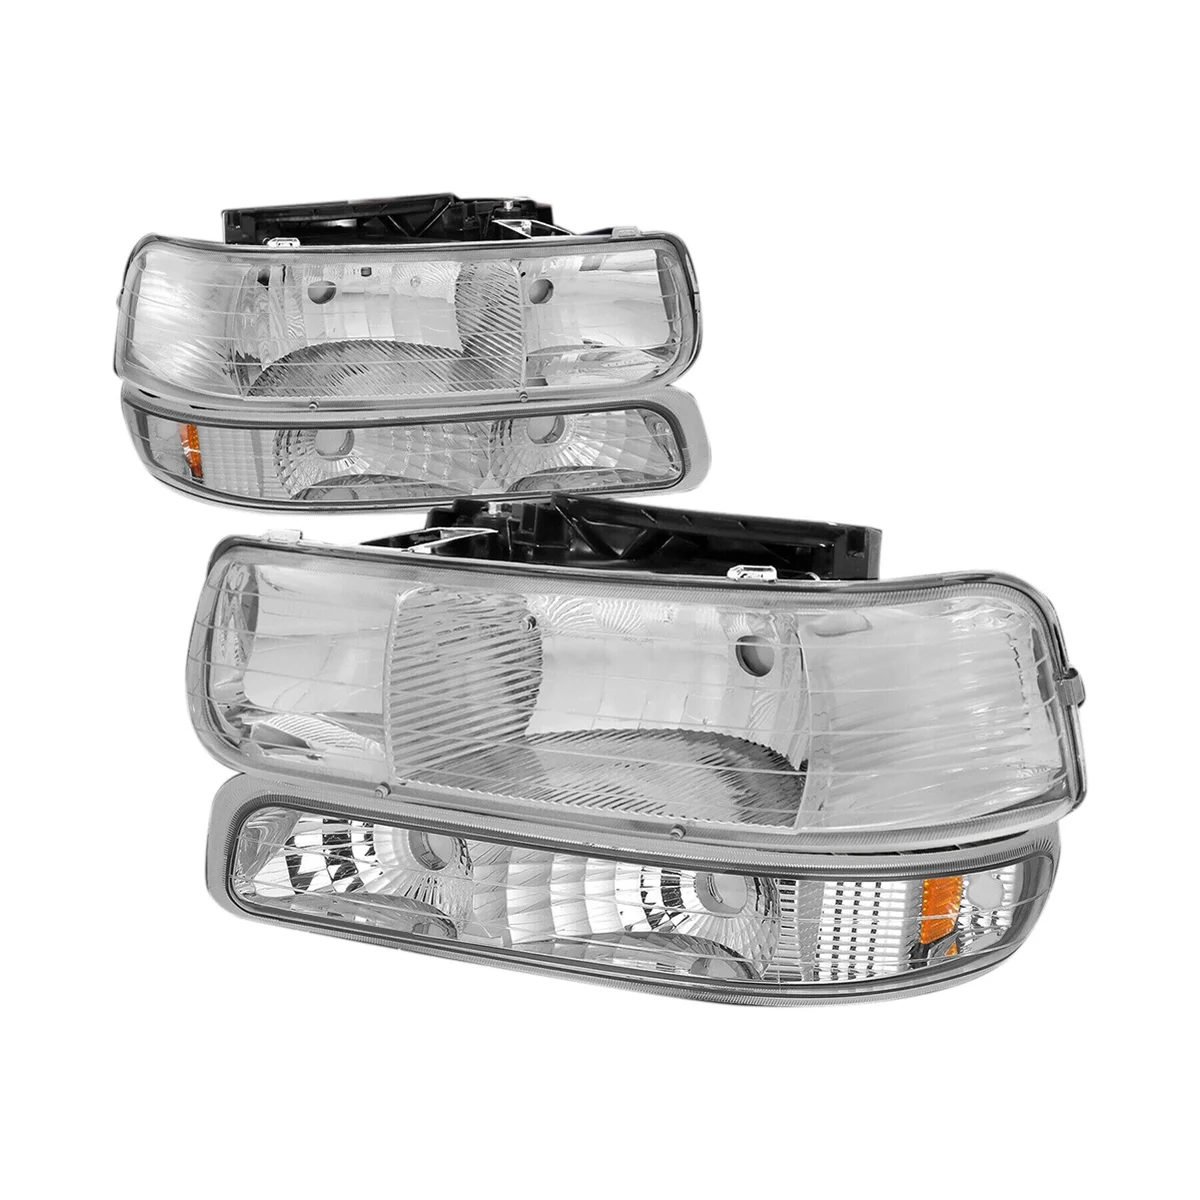 

LED DRL Daytime Running Light Fog Lamp Driving Light Parking Lights HD Headlight for Chevrolet Silverado 99-02 GM2520173